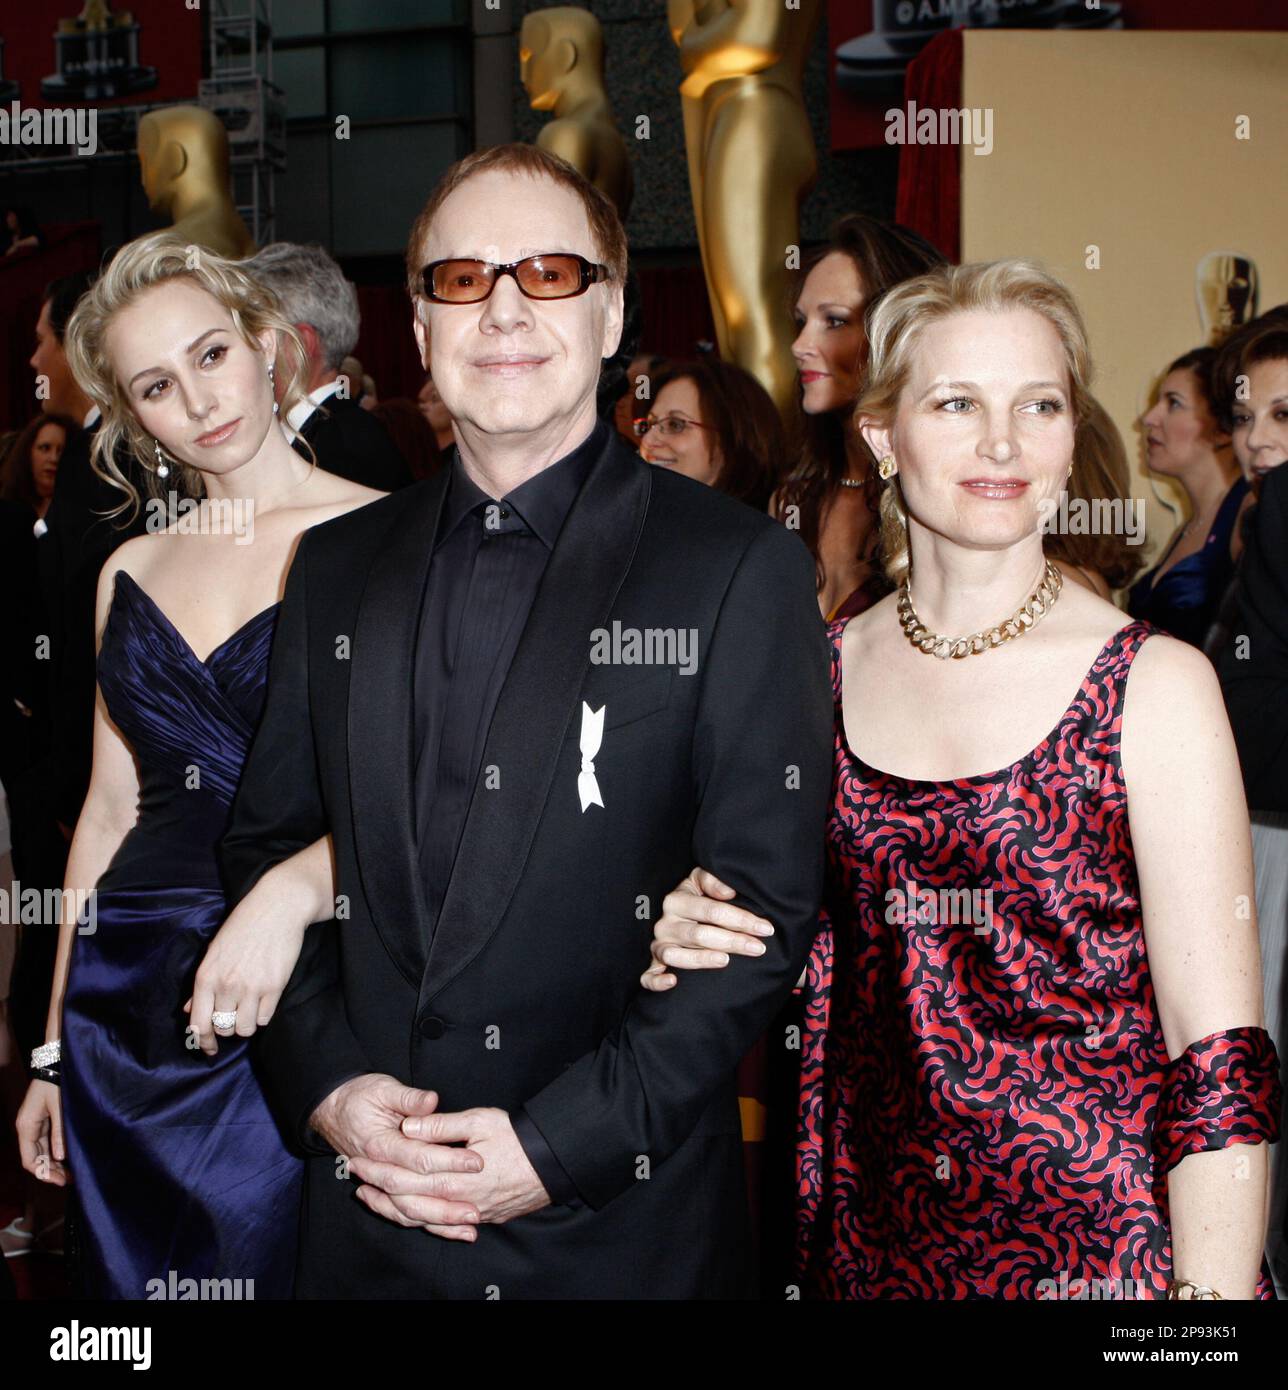 Who is Bridget Fonda's husband Danny Elfman?